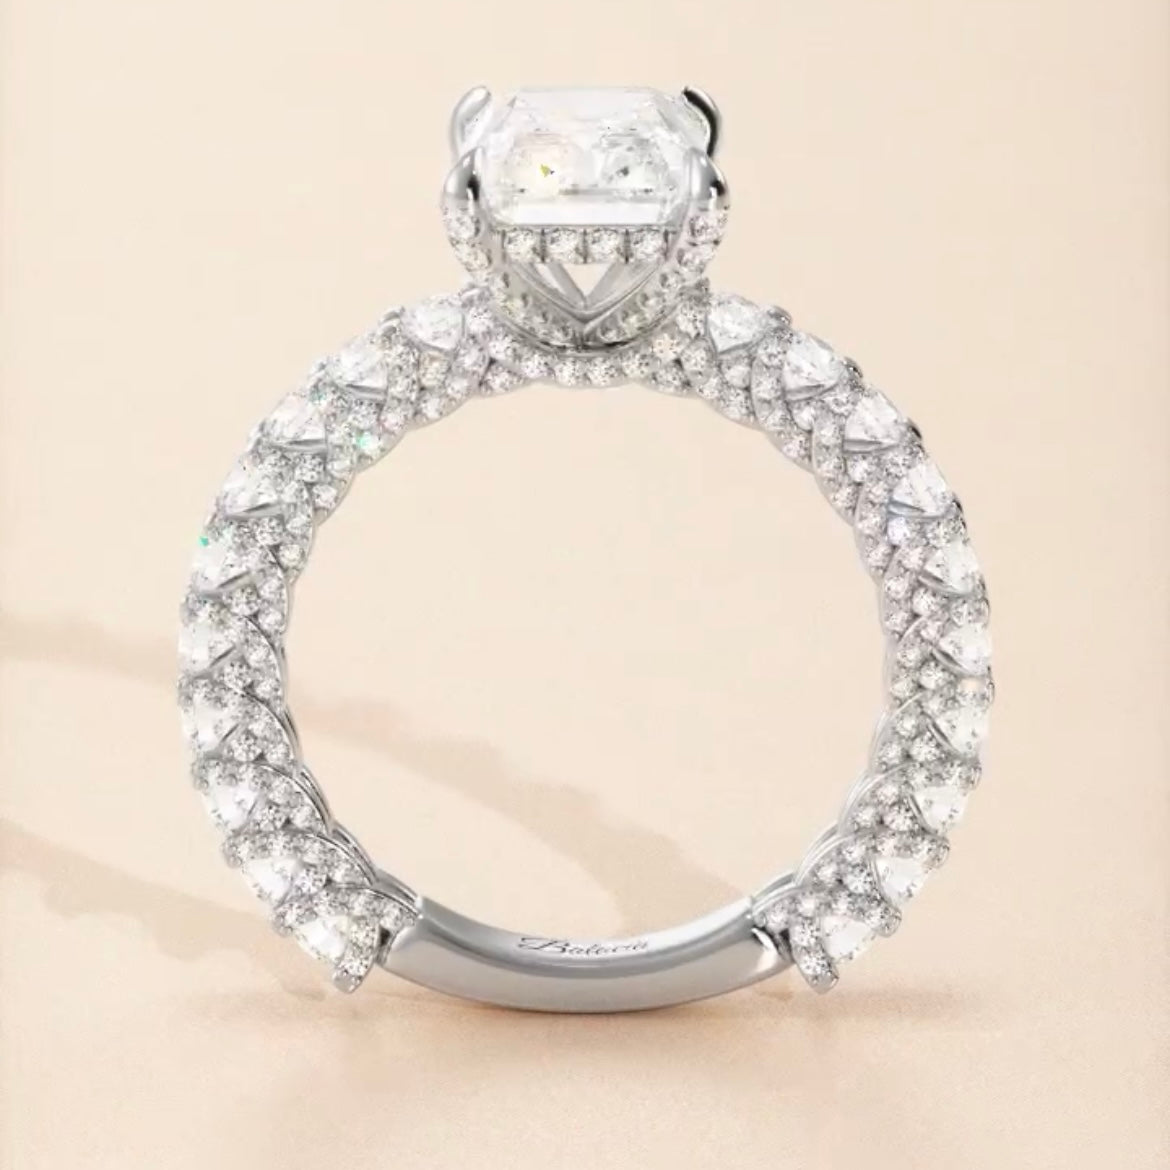 3 Carat Radiant Cut Diamond Engagement Ring Set